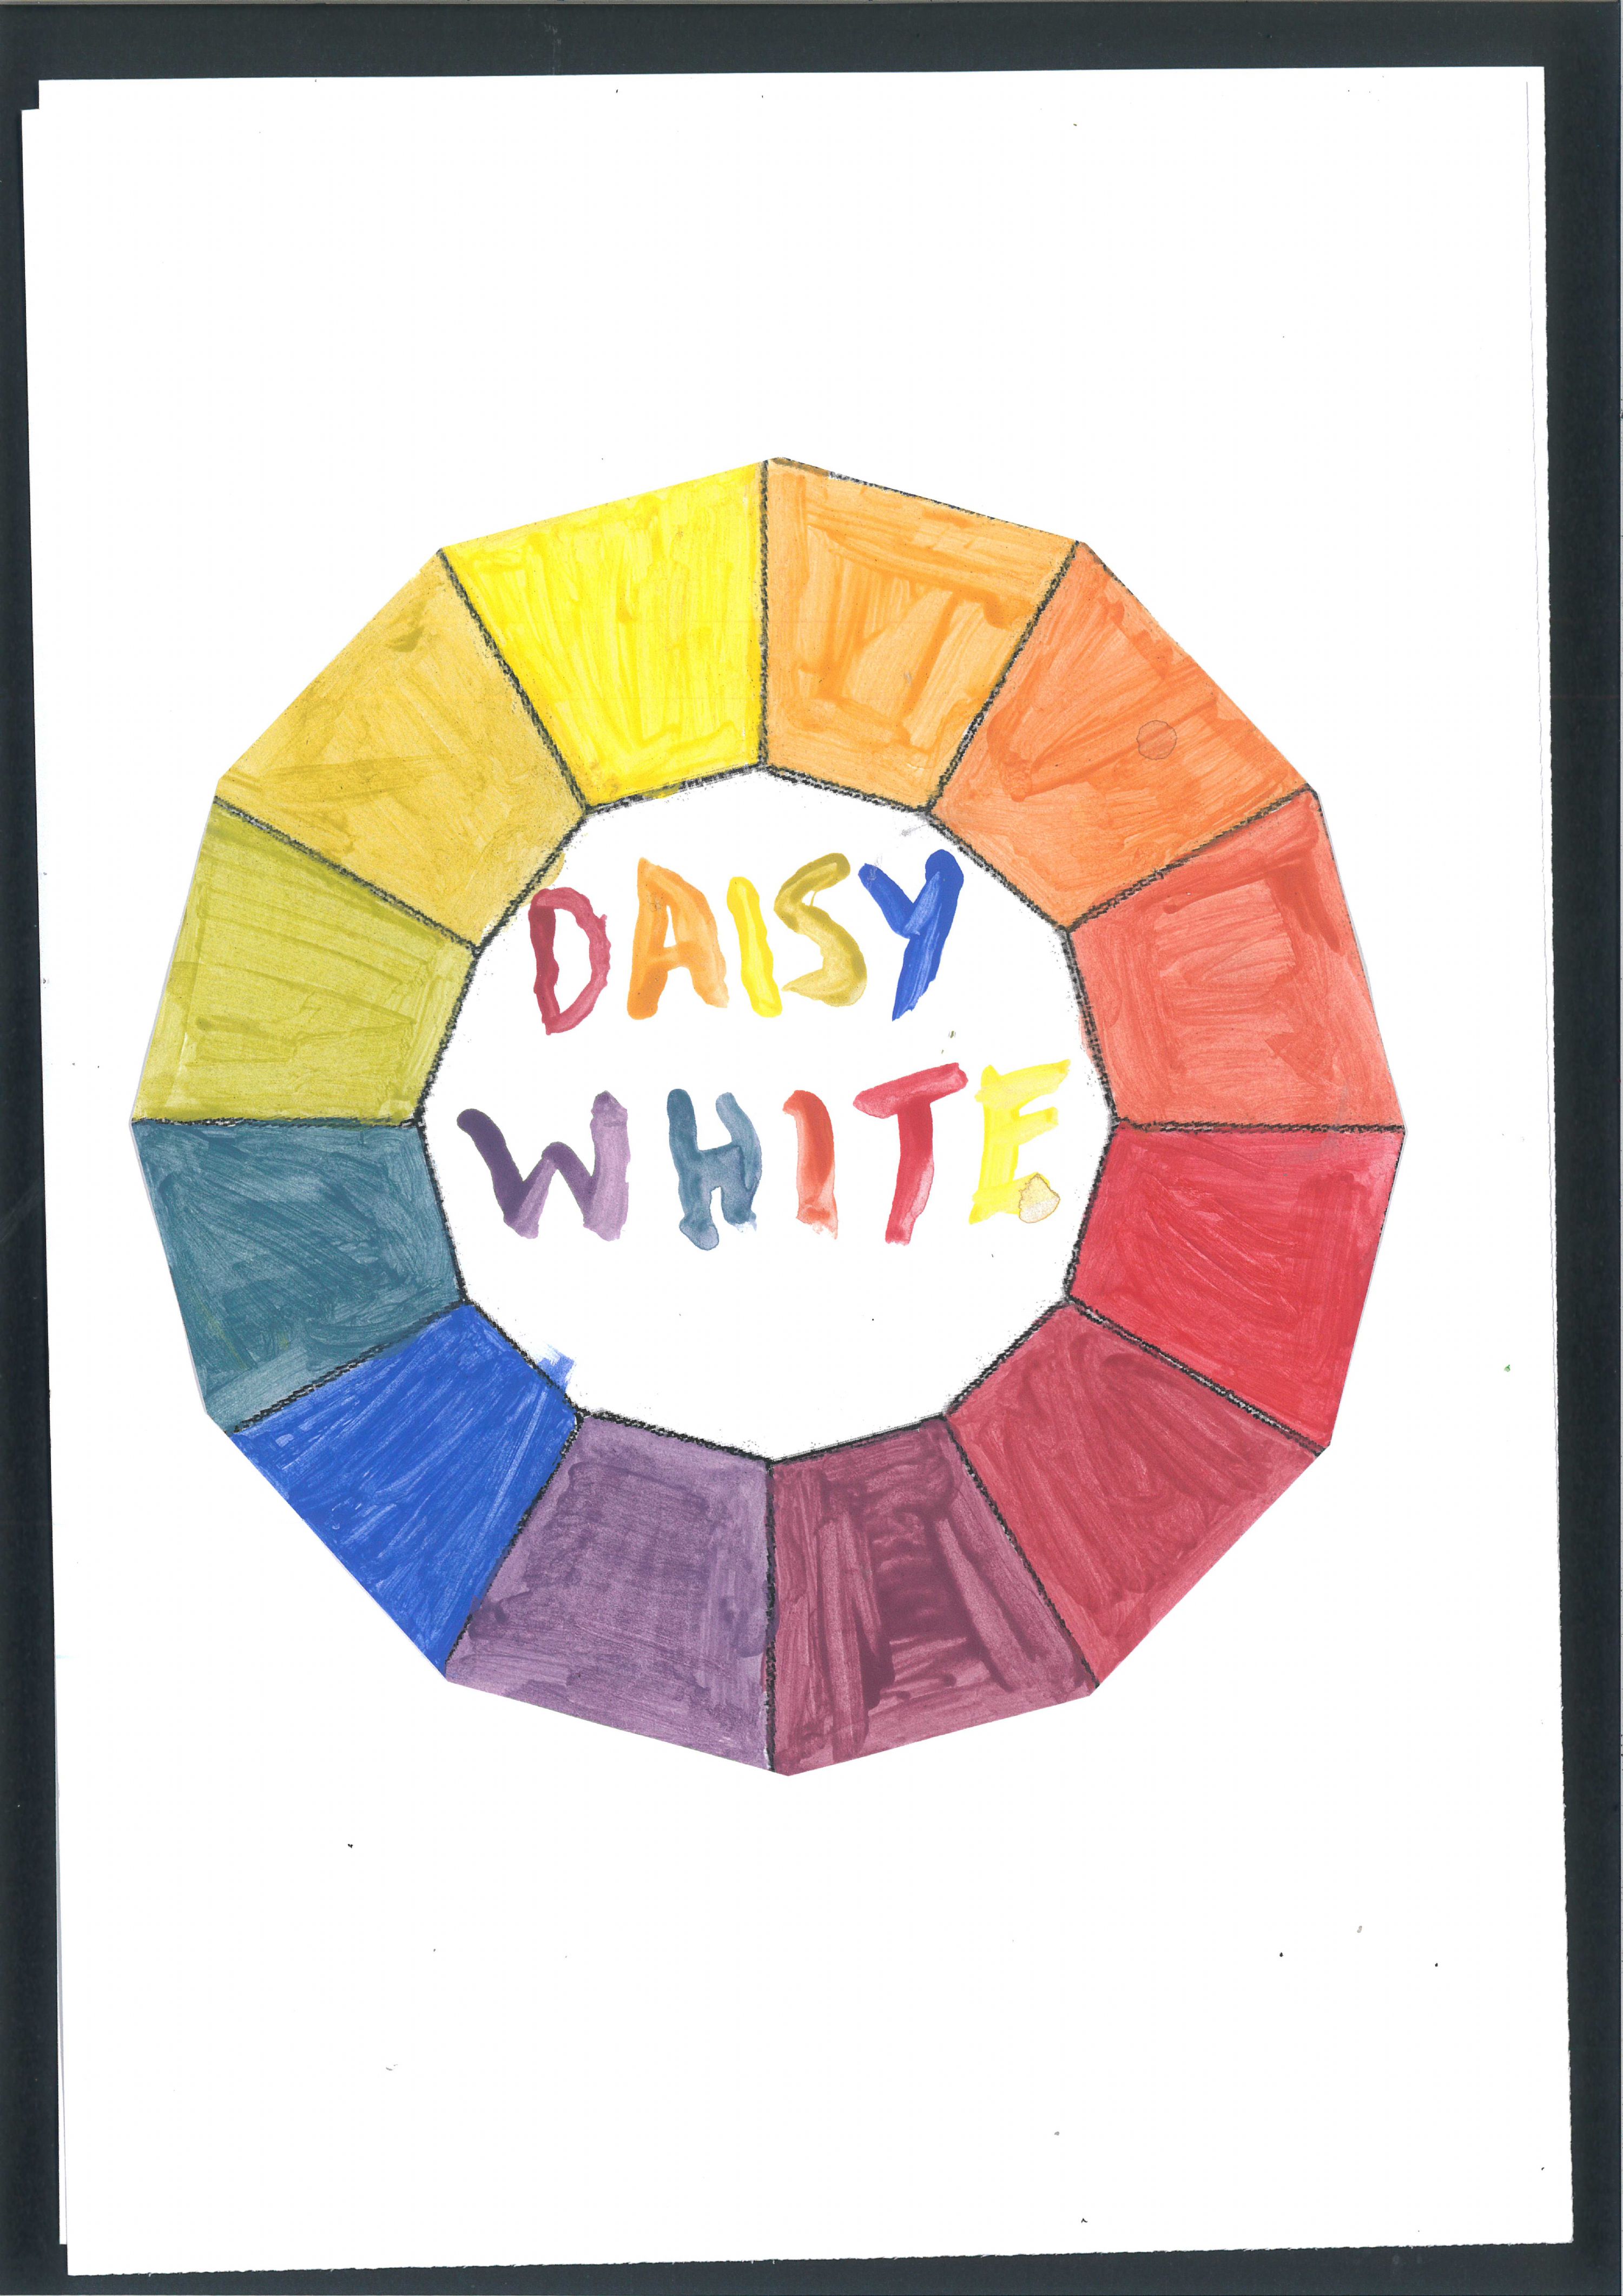 Daisy Artist of the Week Colour Wheel